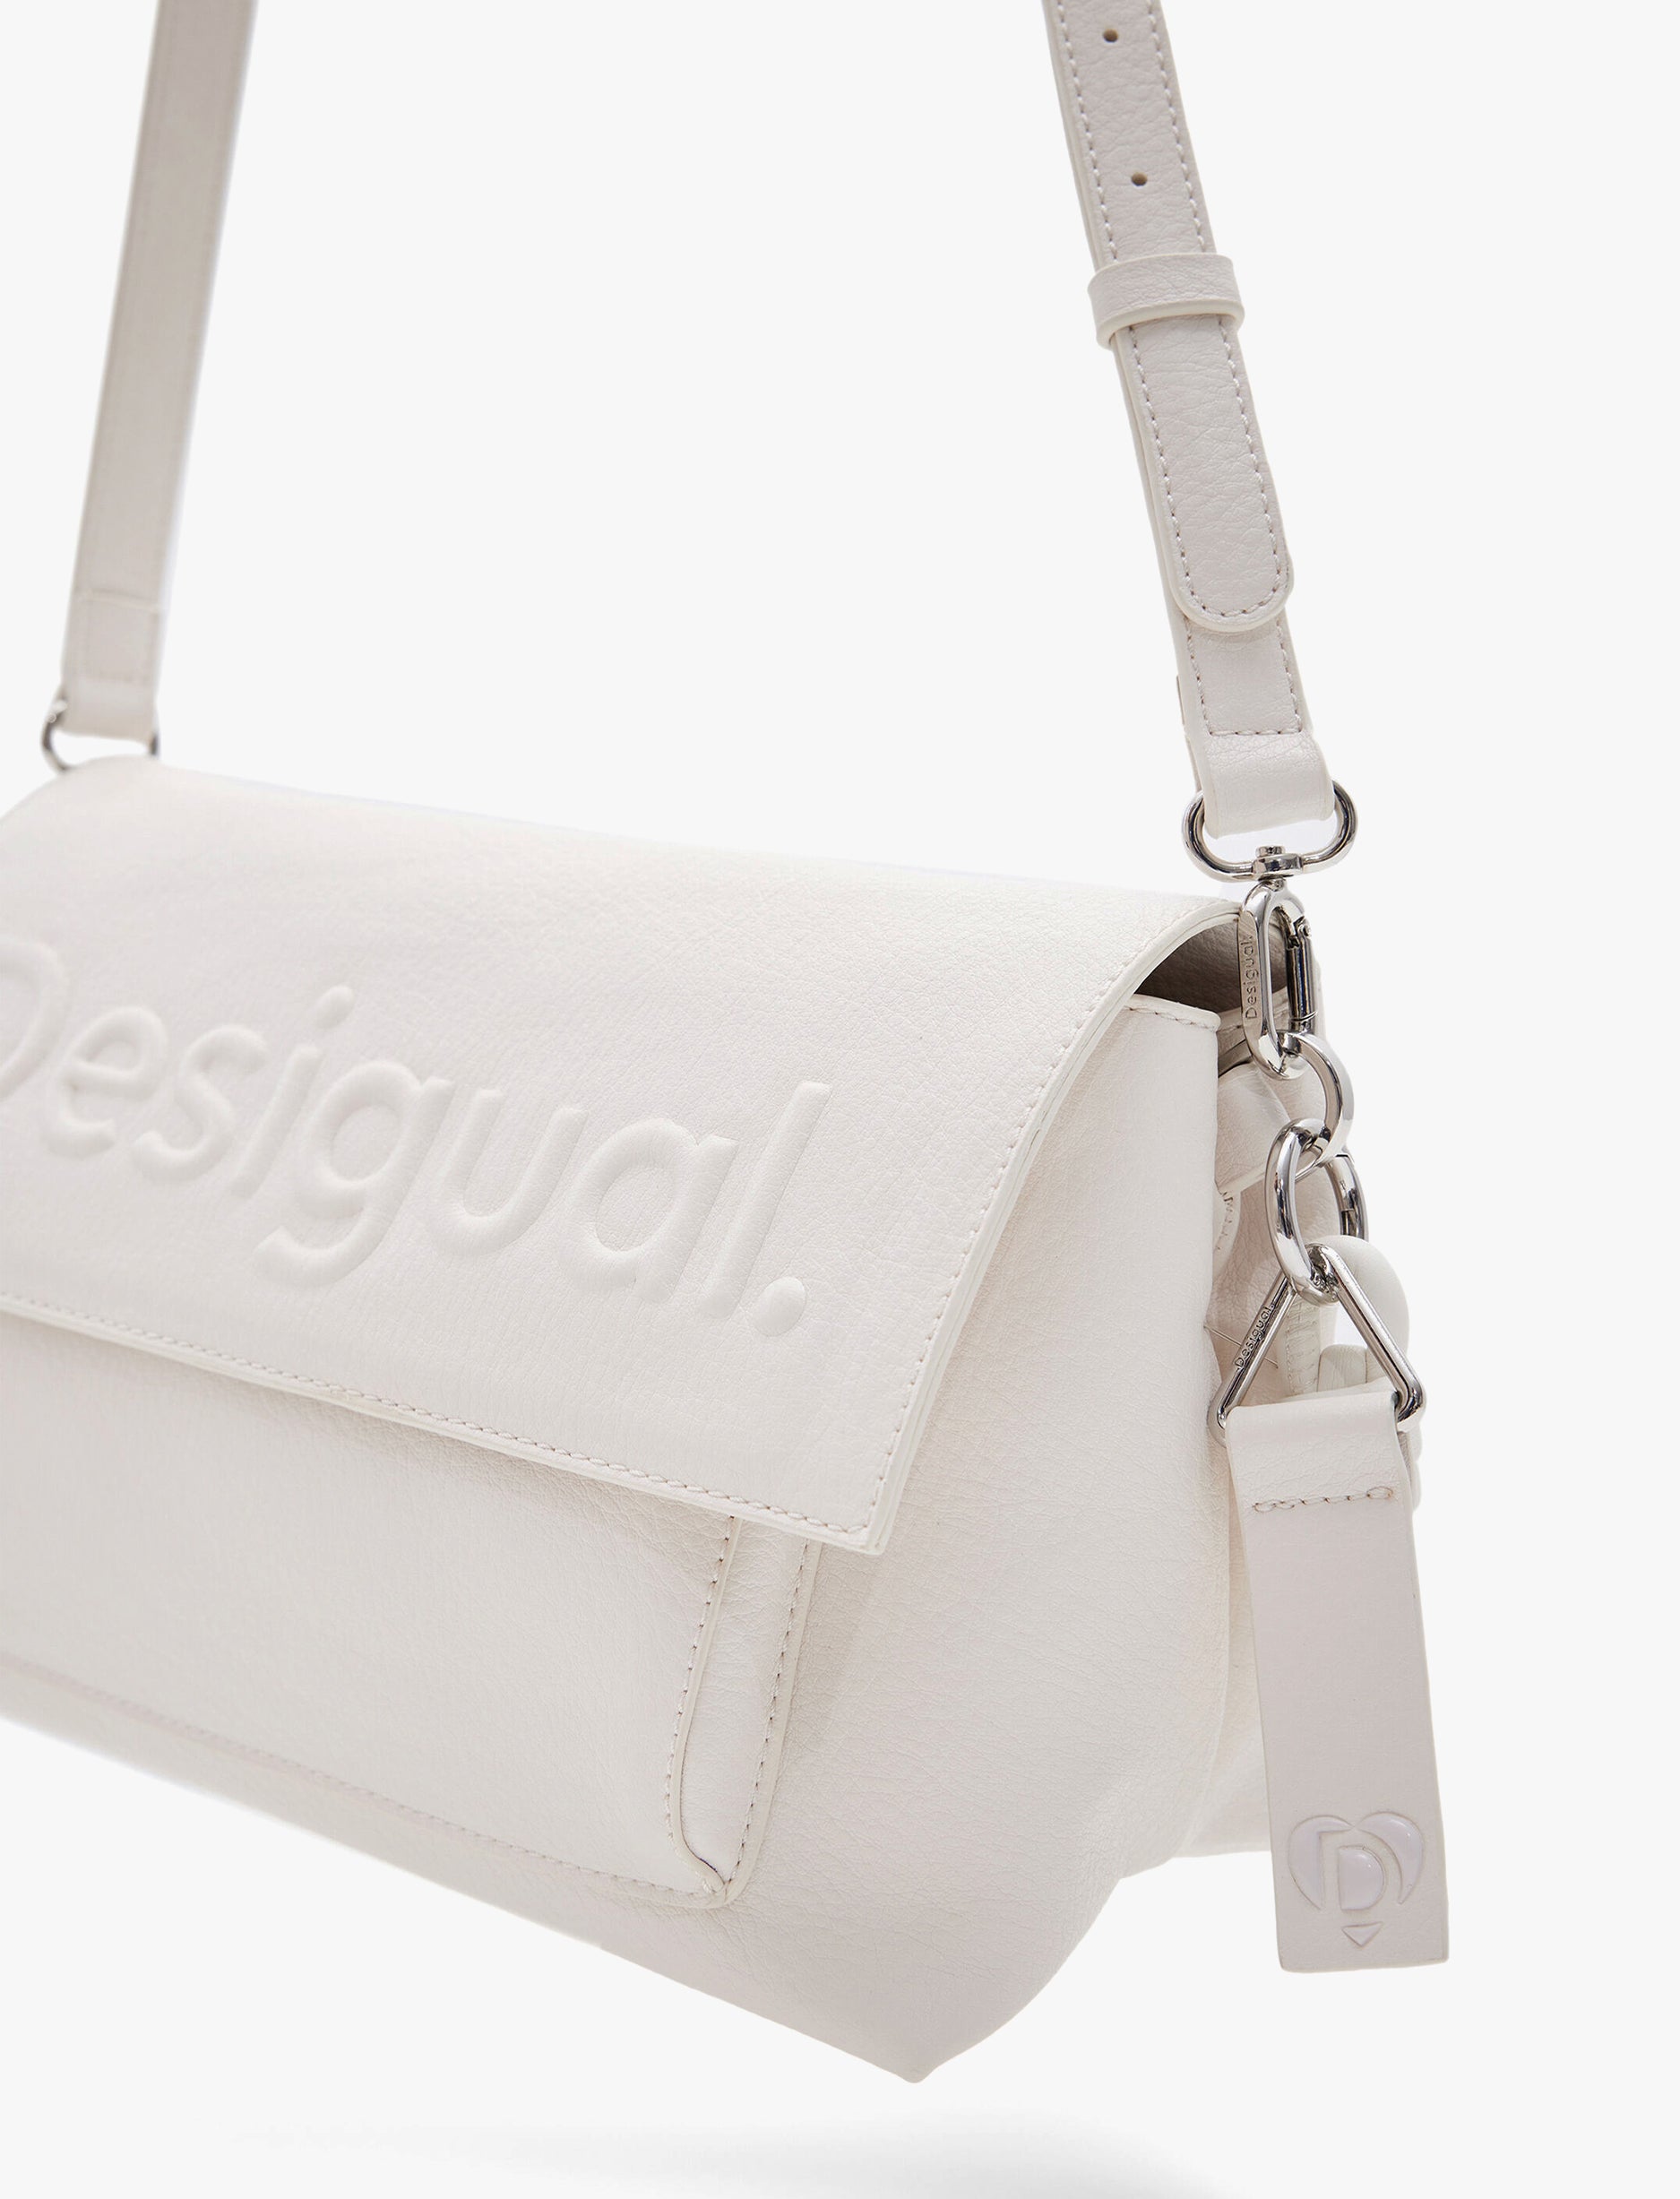 Desigual Bag Half Logo 24 Venecia 2.0 - תיק קרוסבודי בצבע לבן